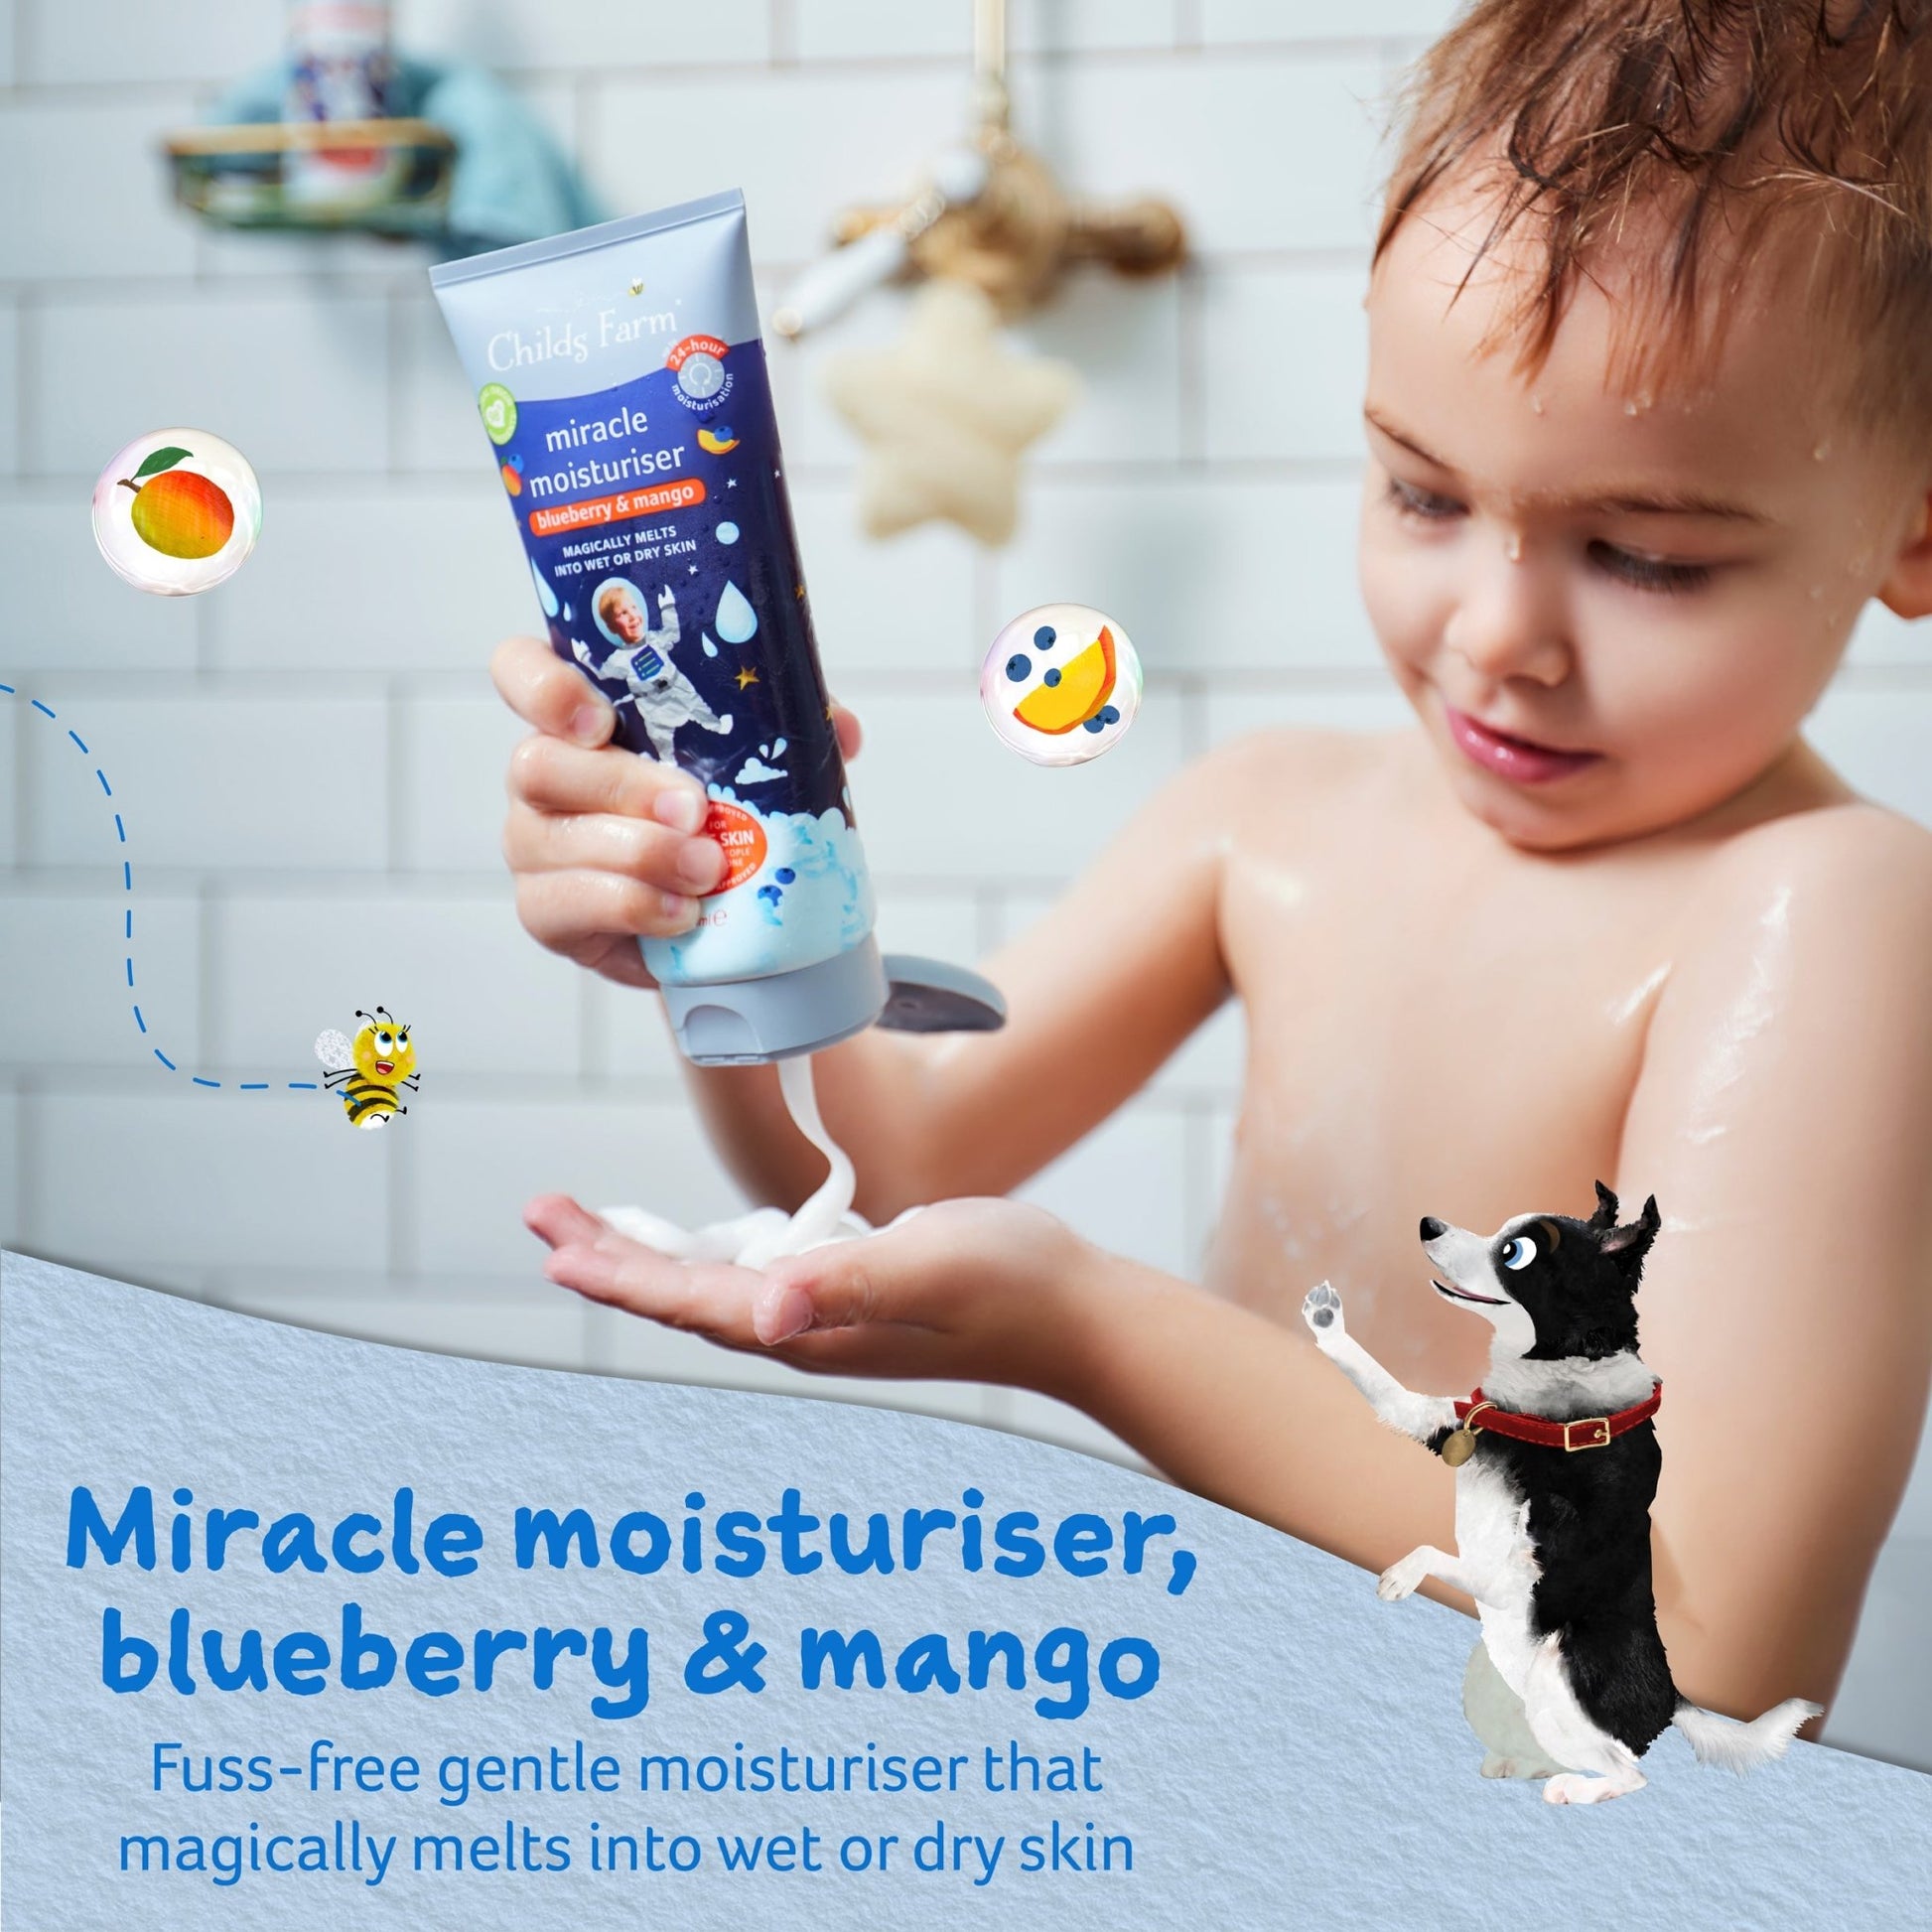 Childs Farm miracle moisturiser blueberry & mango